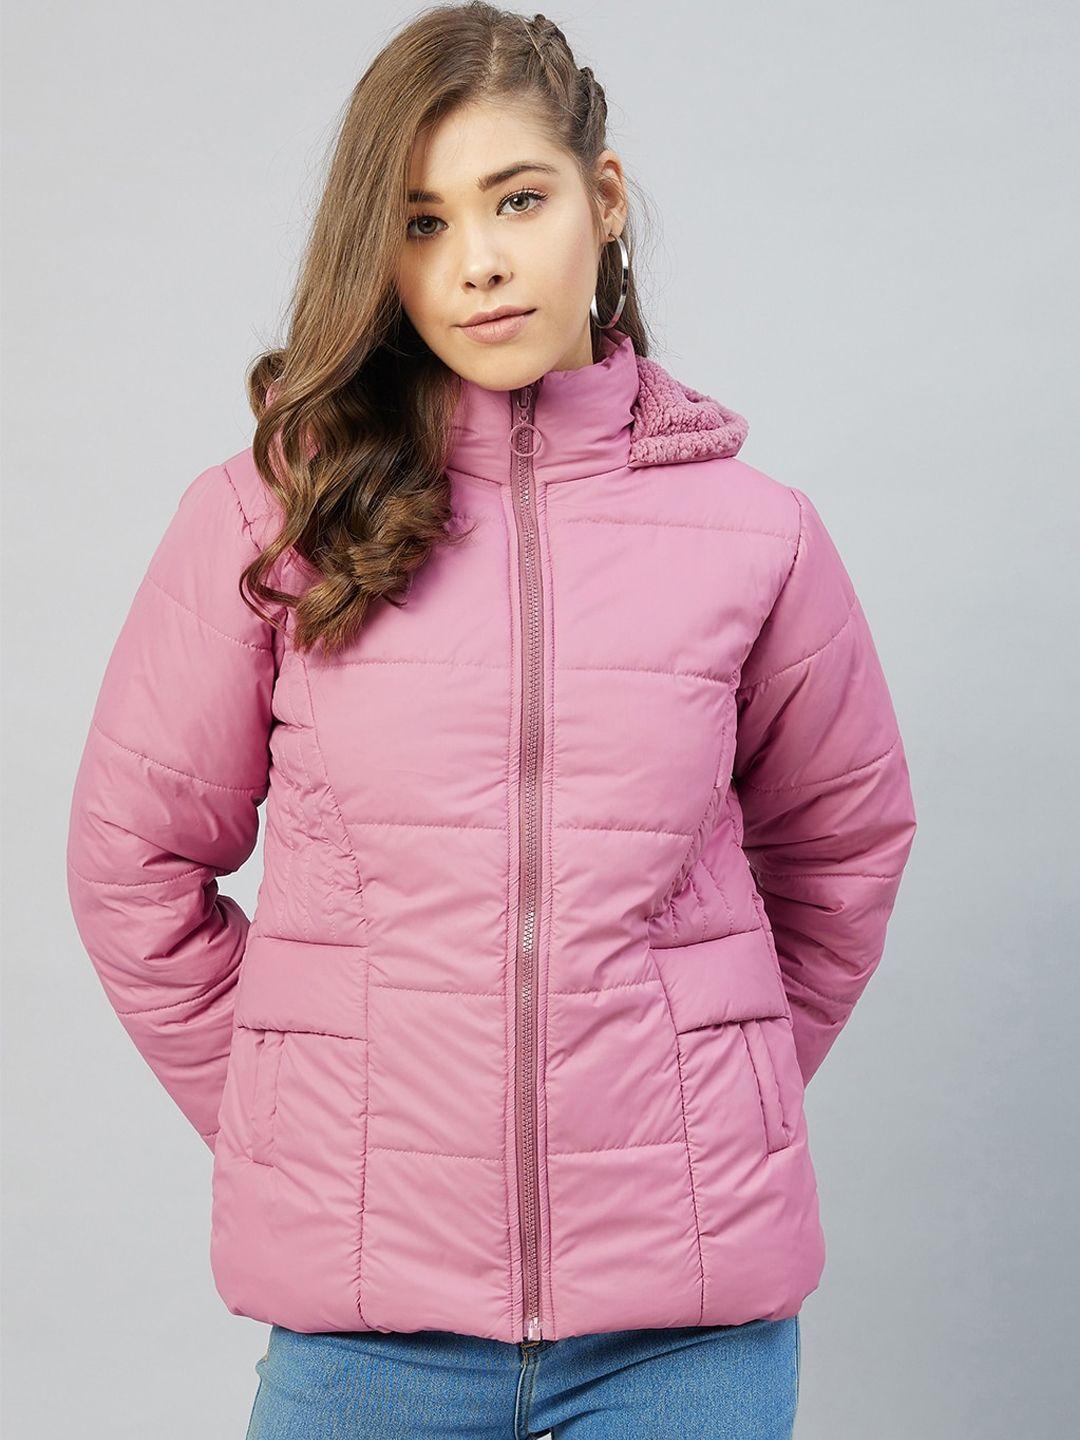 carlton-london-women-pink-lightweight-padded-jacket